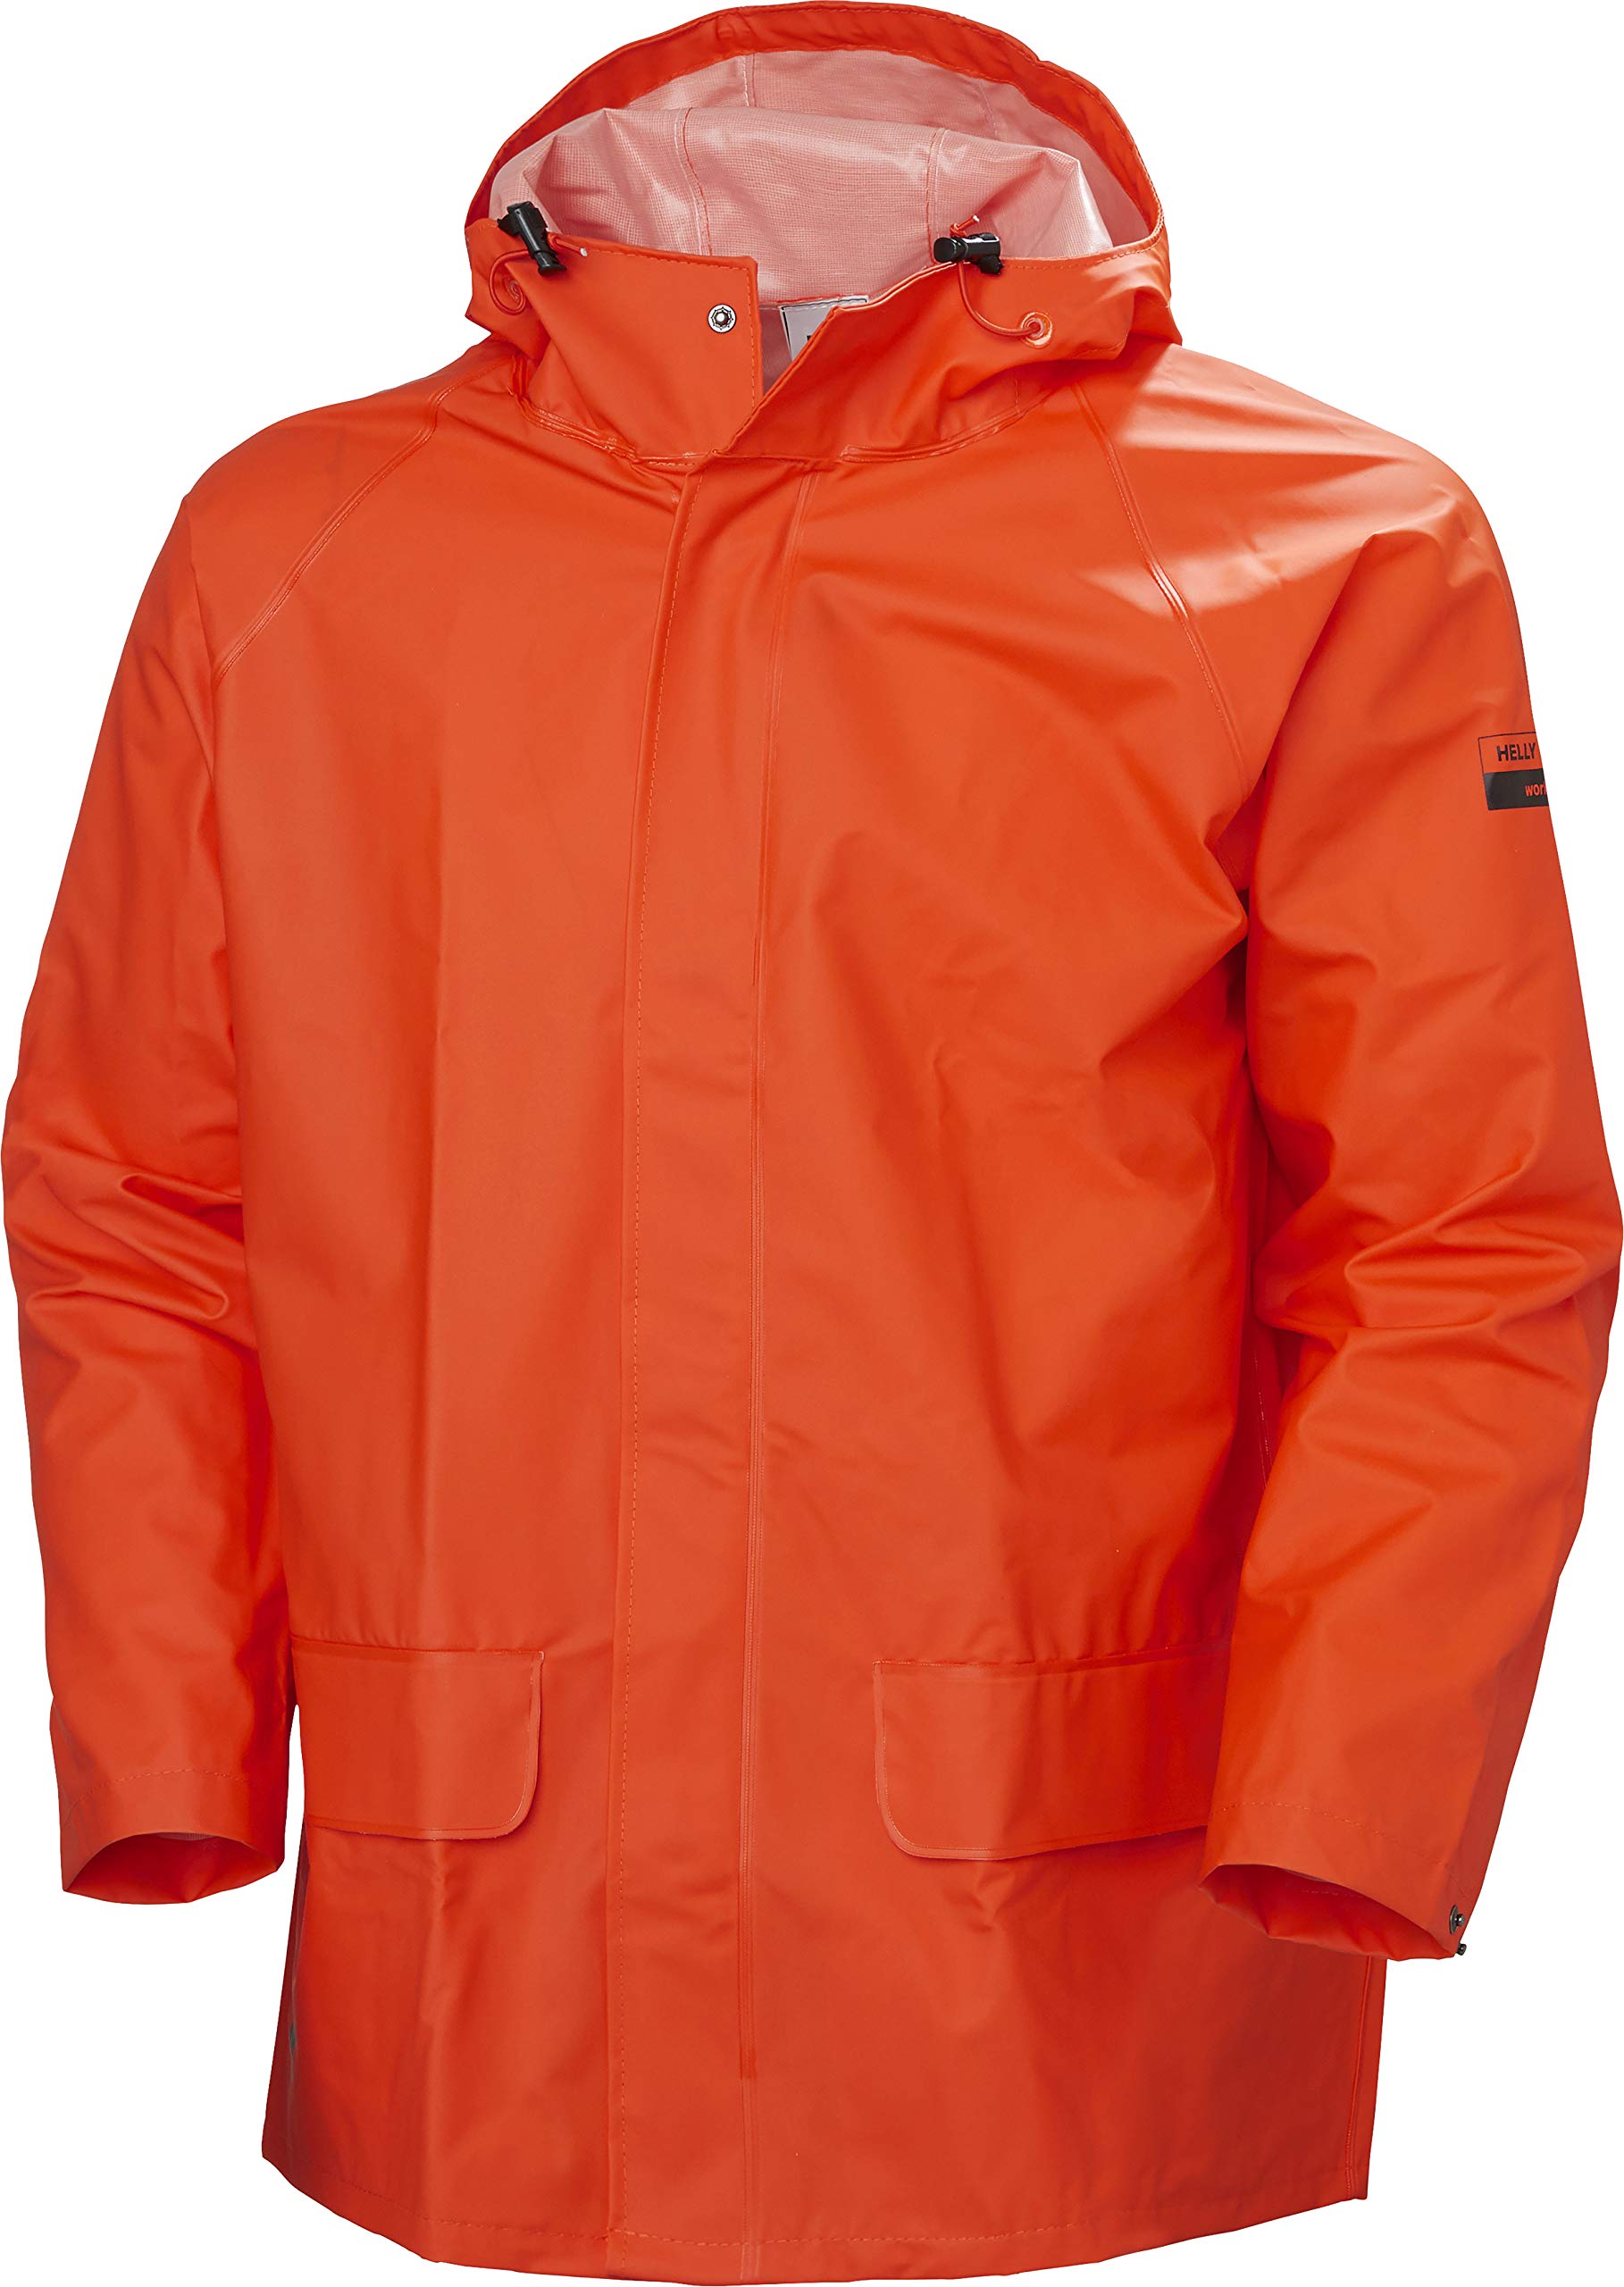 Helly-Hansen Workwear Mandal Adjustable Waterproof Jackets for Men - Heavy Duty Comfortable PVC-Coated Protective Rain Coat